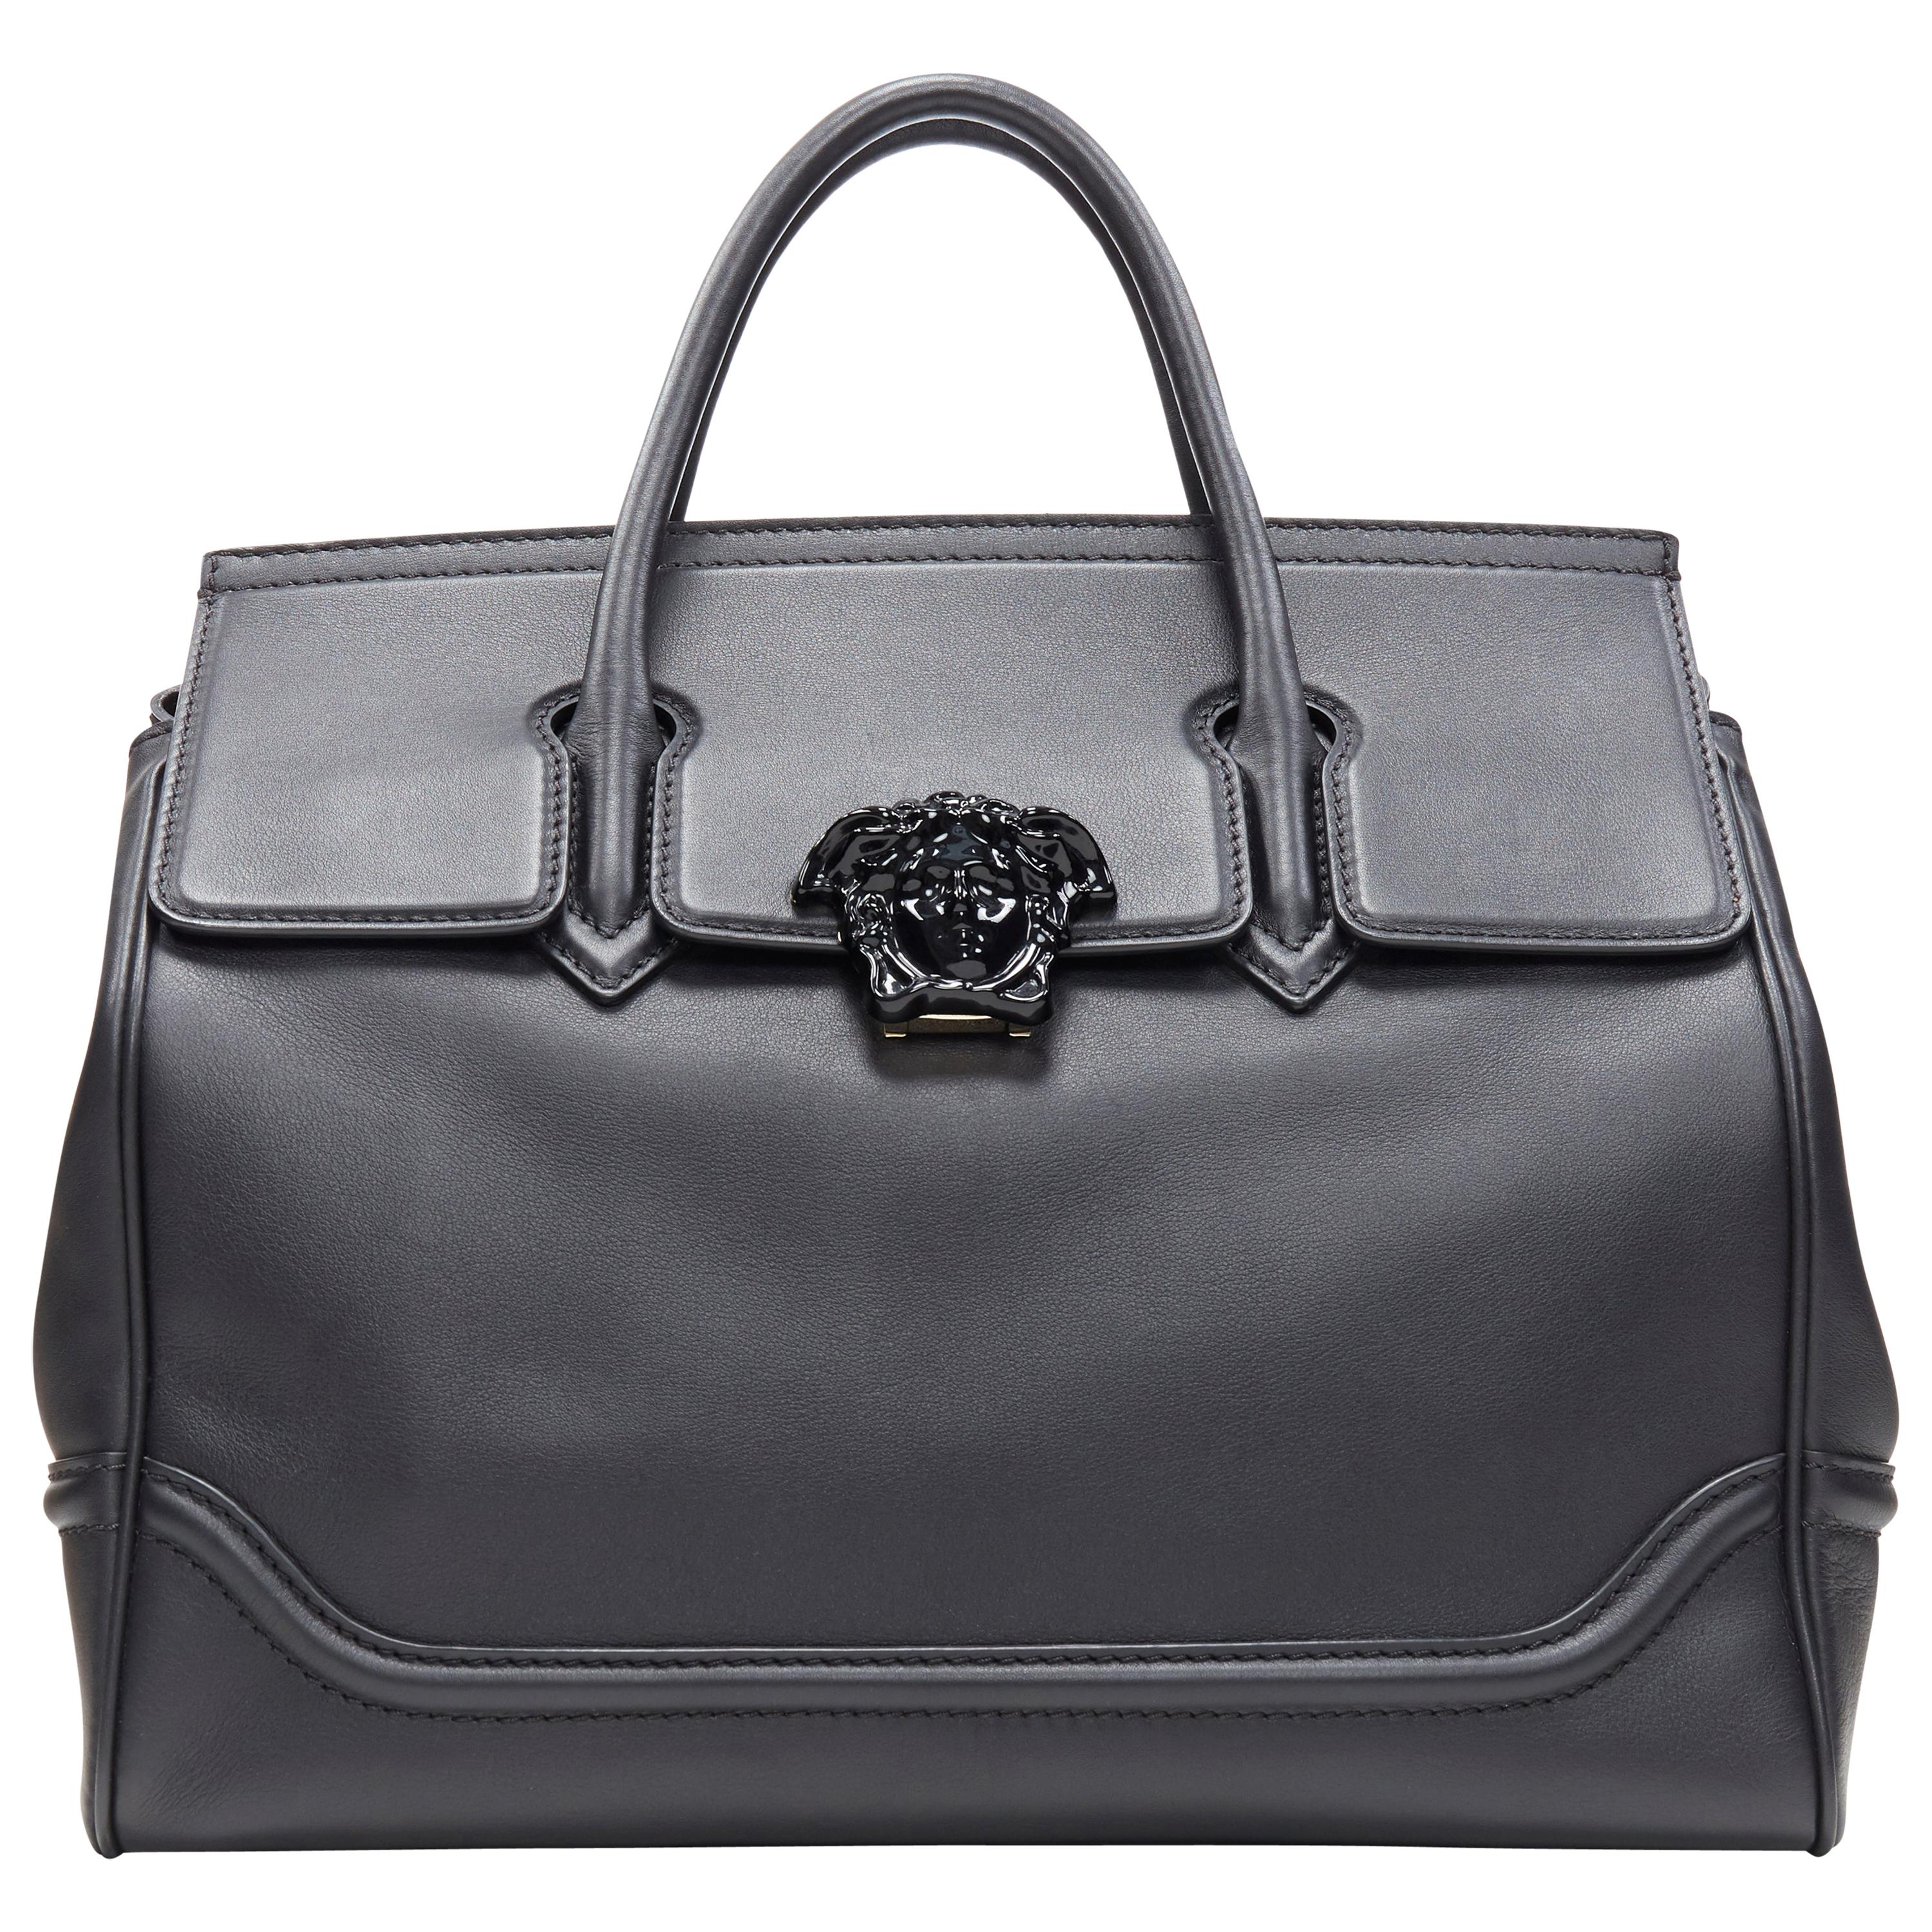 new VERSACE Palazzo Empire Large classic black calf leather Medusa satchel bag